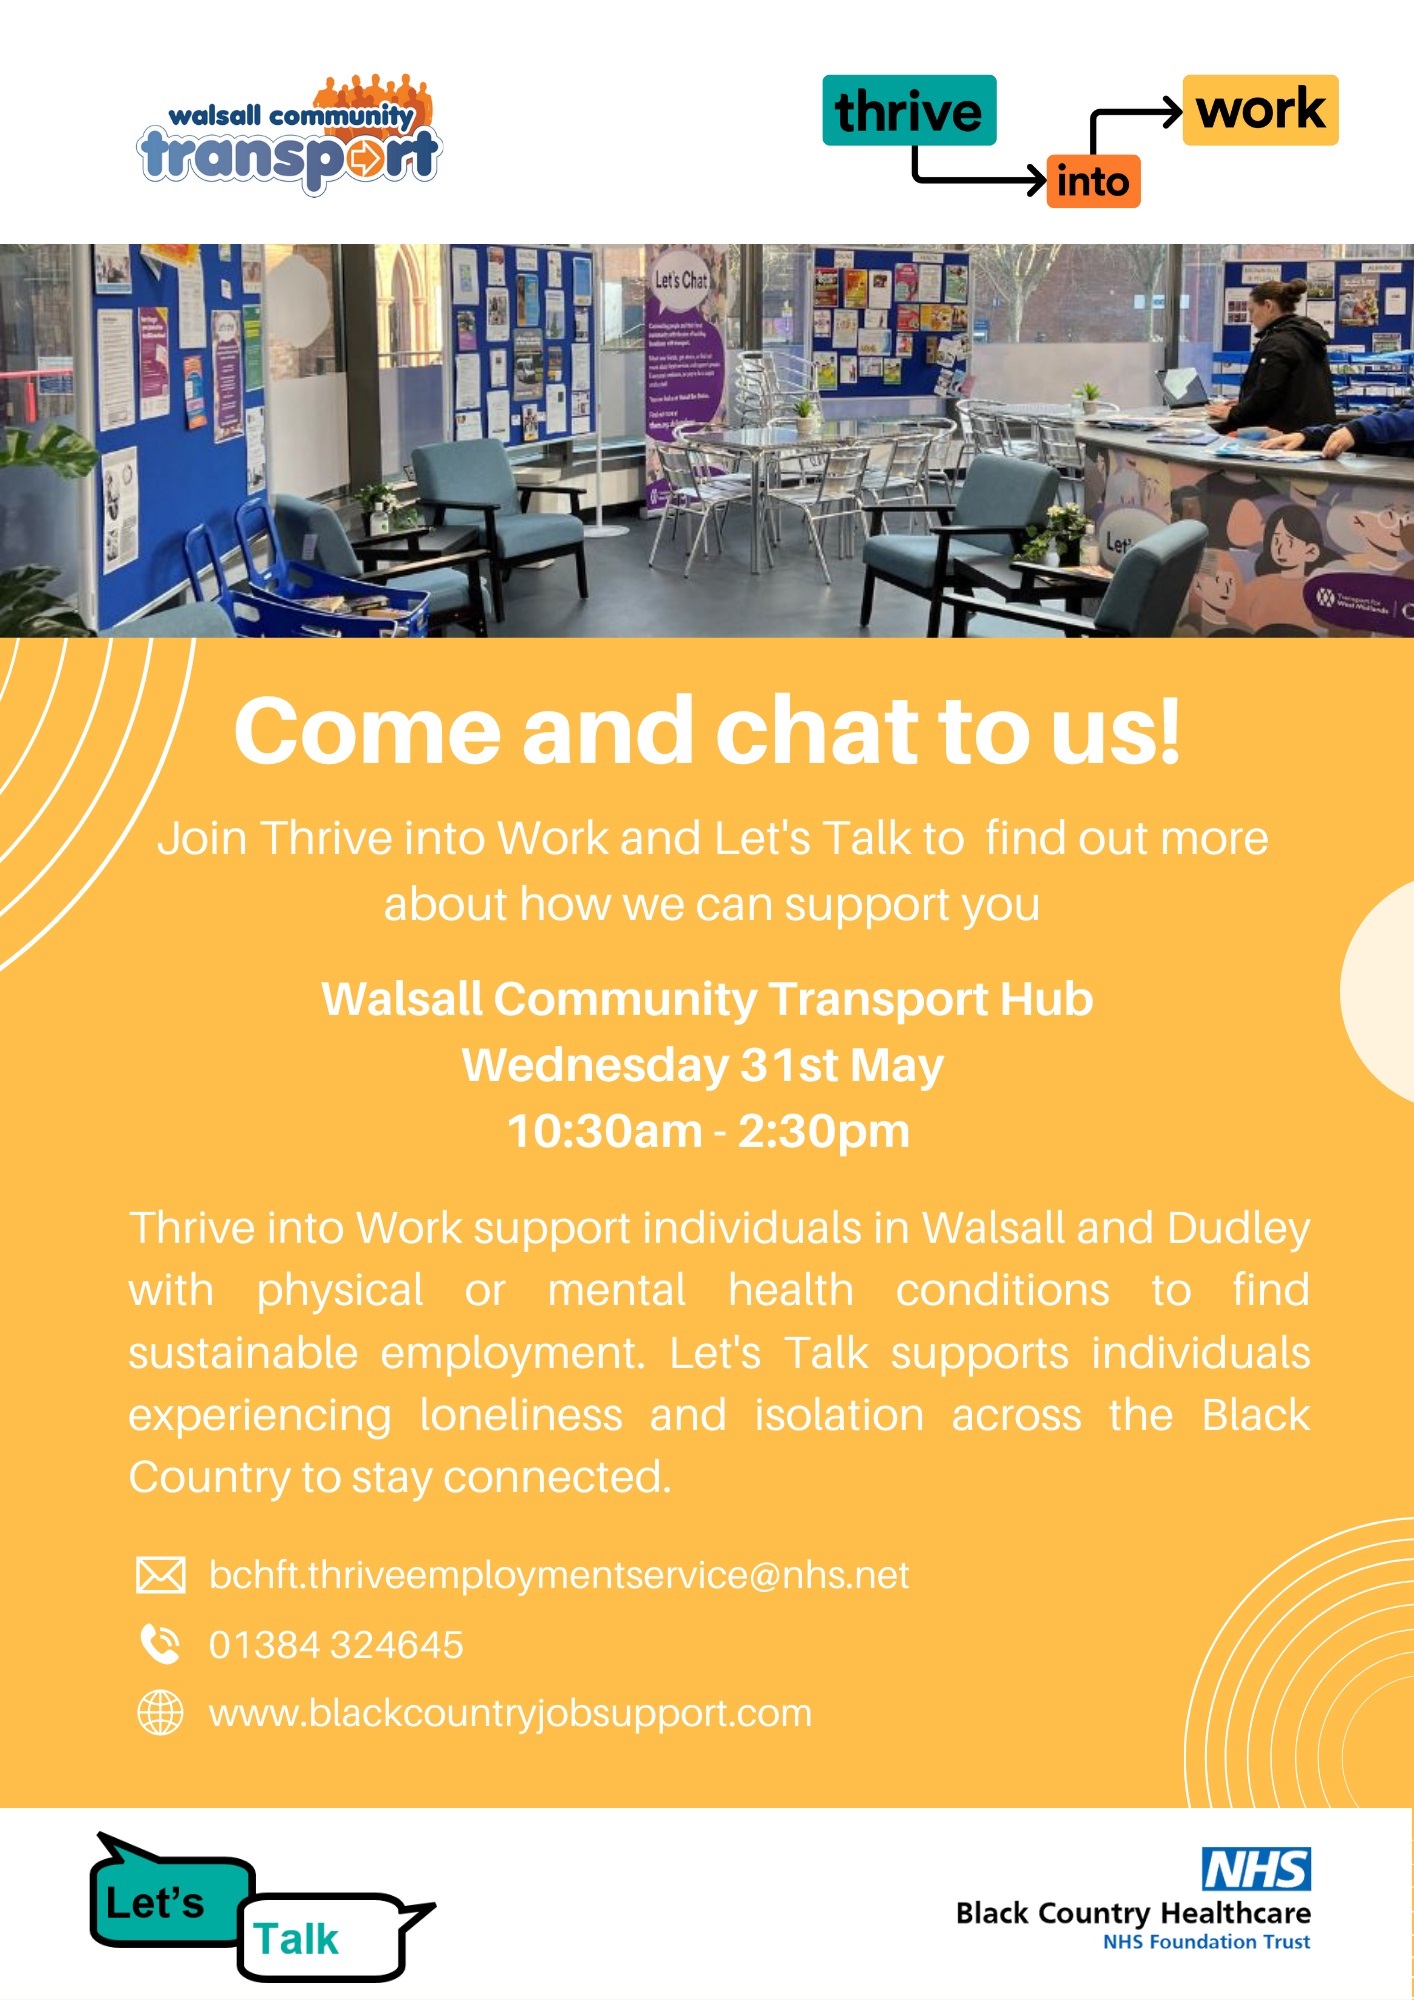 Thrive Transport Hub Walsall